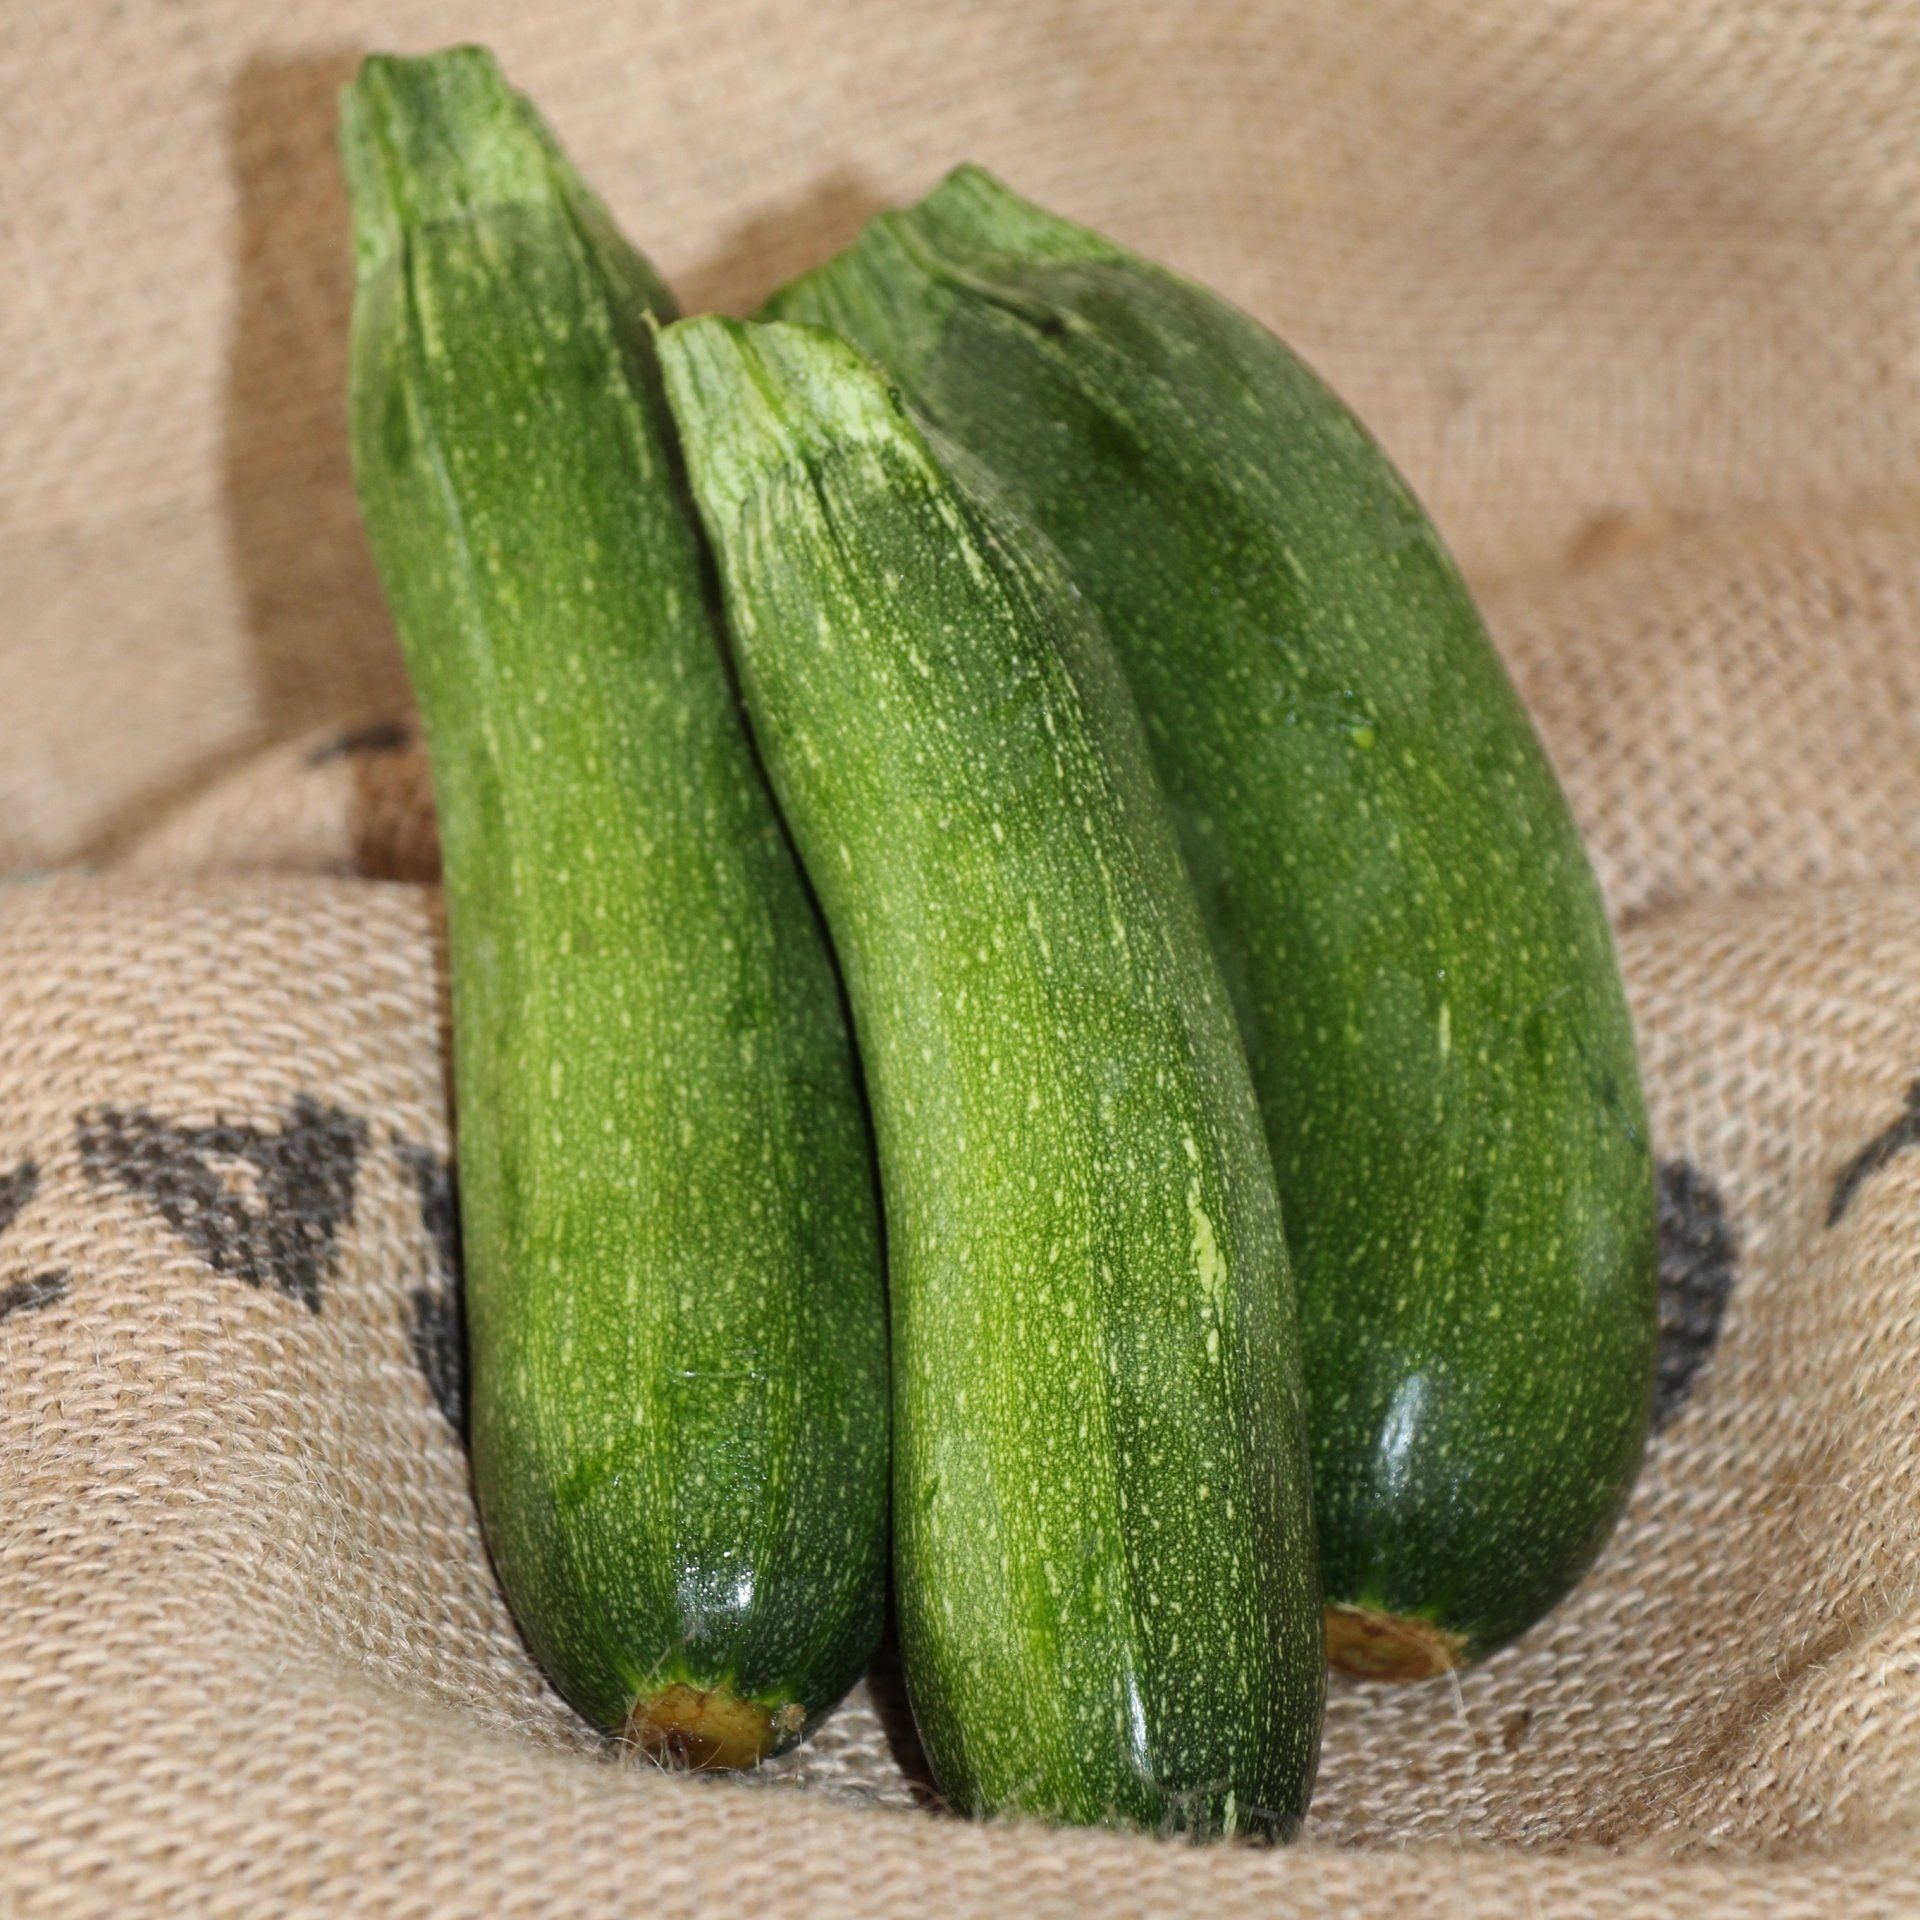 locally grown zucchini